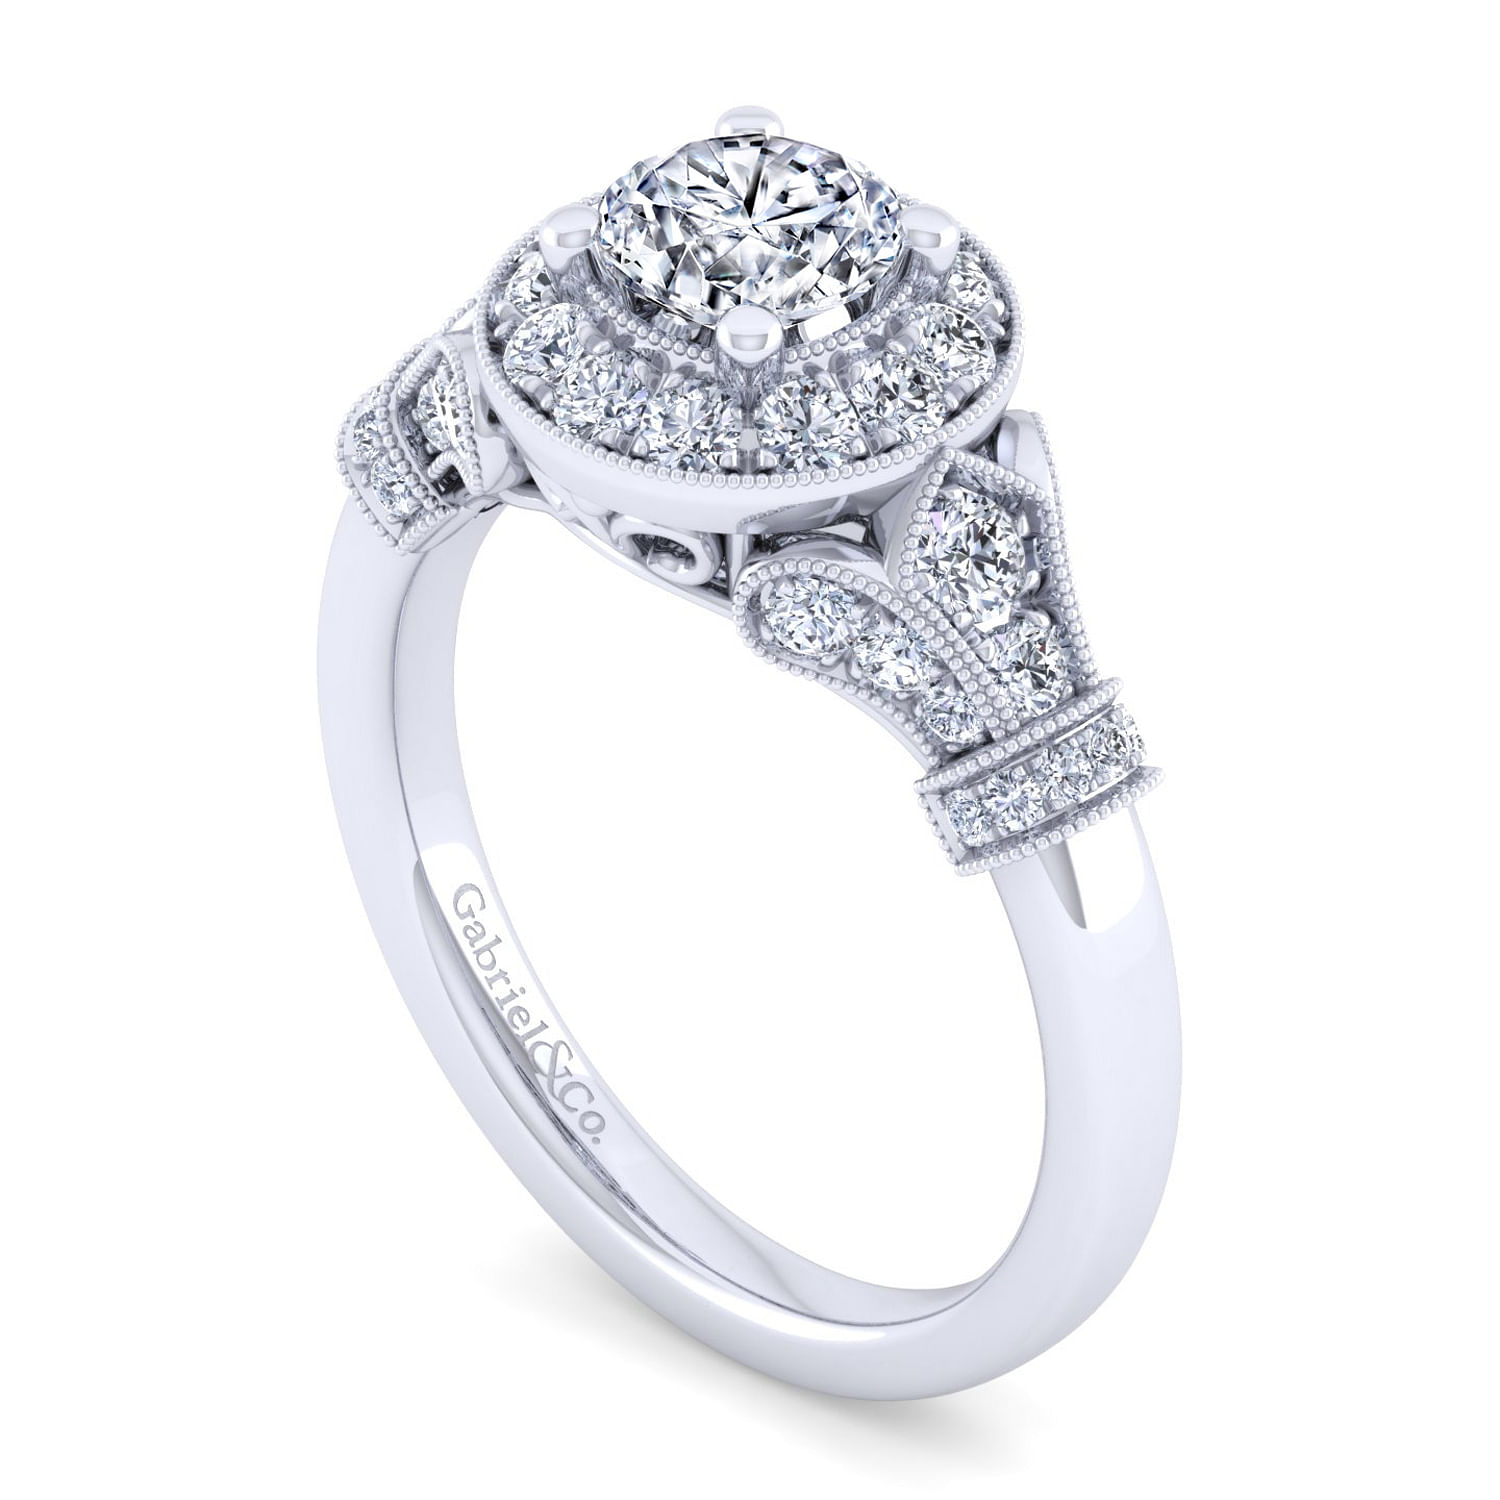 Vintage Inspired 14K White Gold Round Three Stone Diamond Engagement Ring